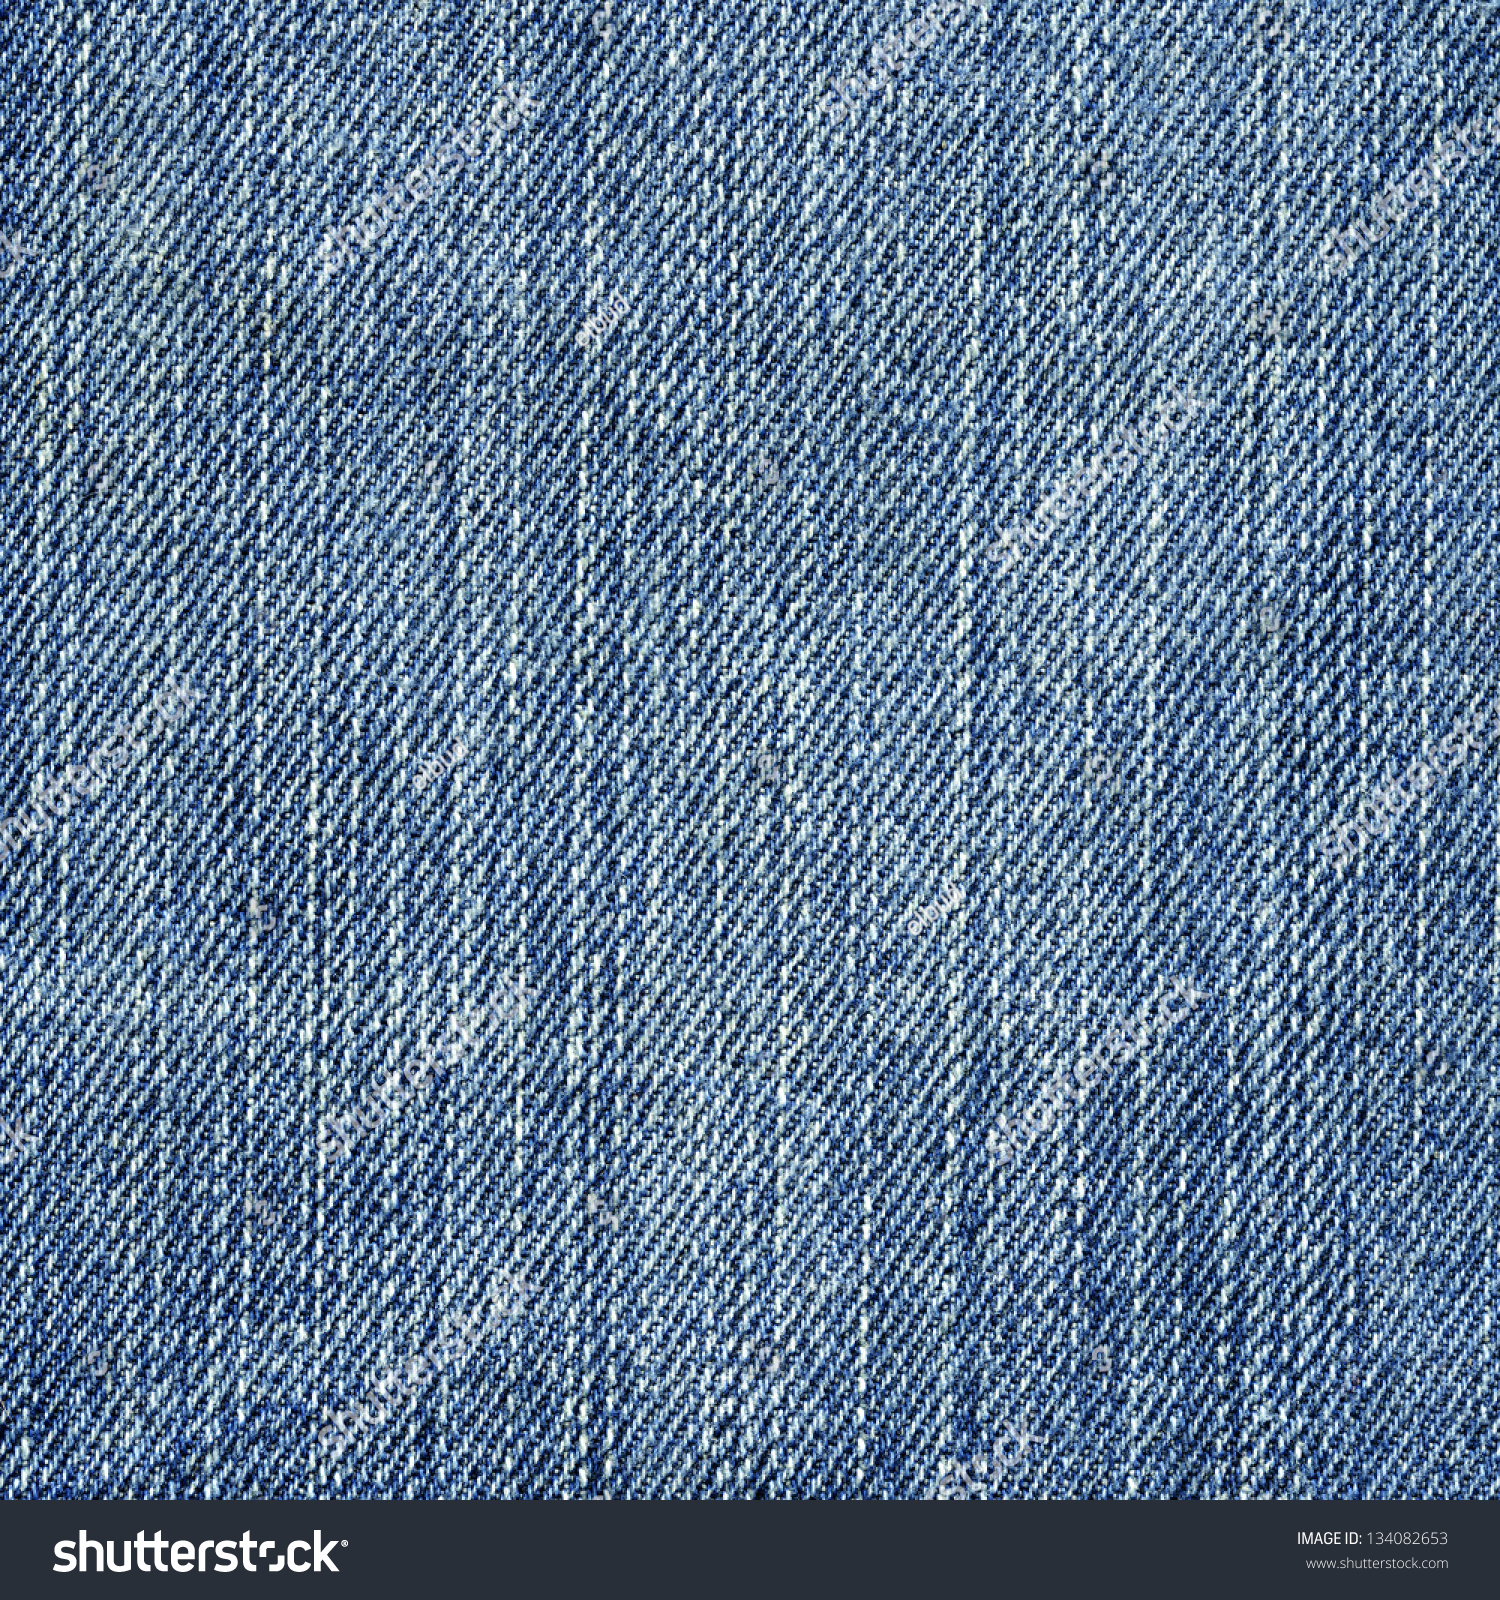 High Resolution Scan Of Light Blue Denim Fabric. Stock Photo 134082653 ...